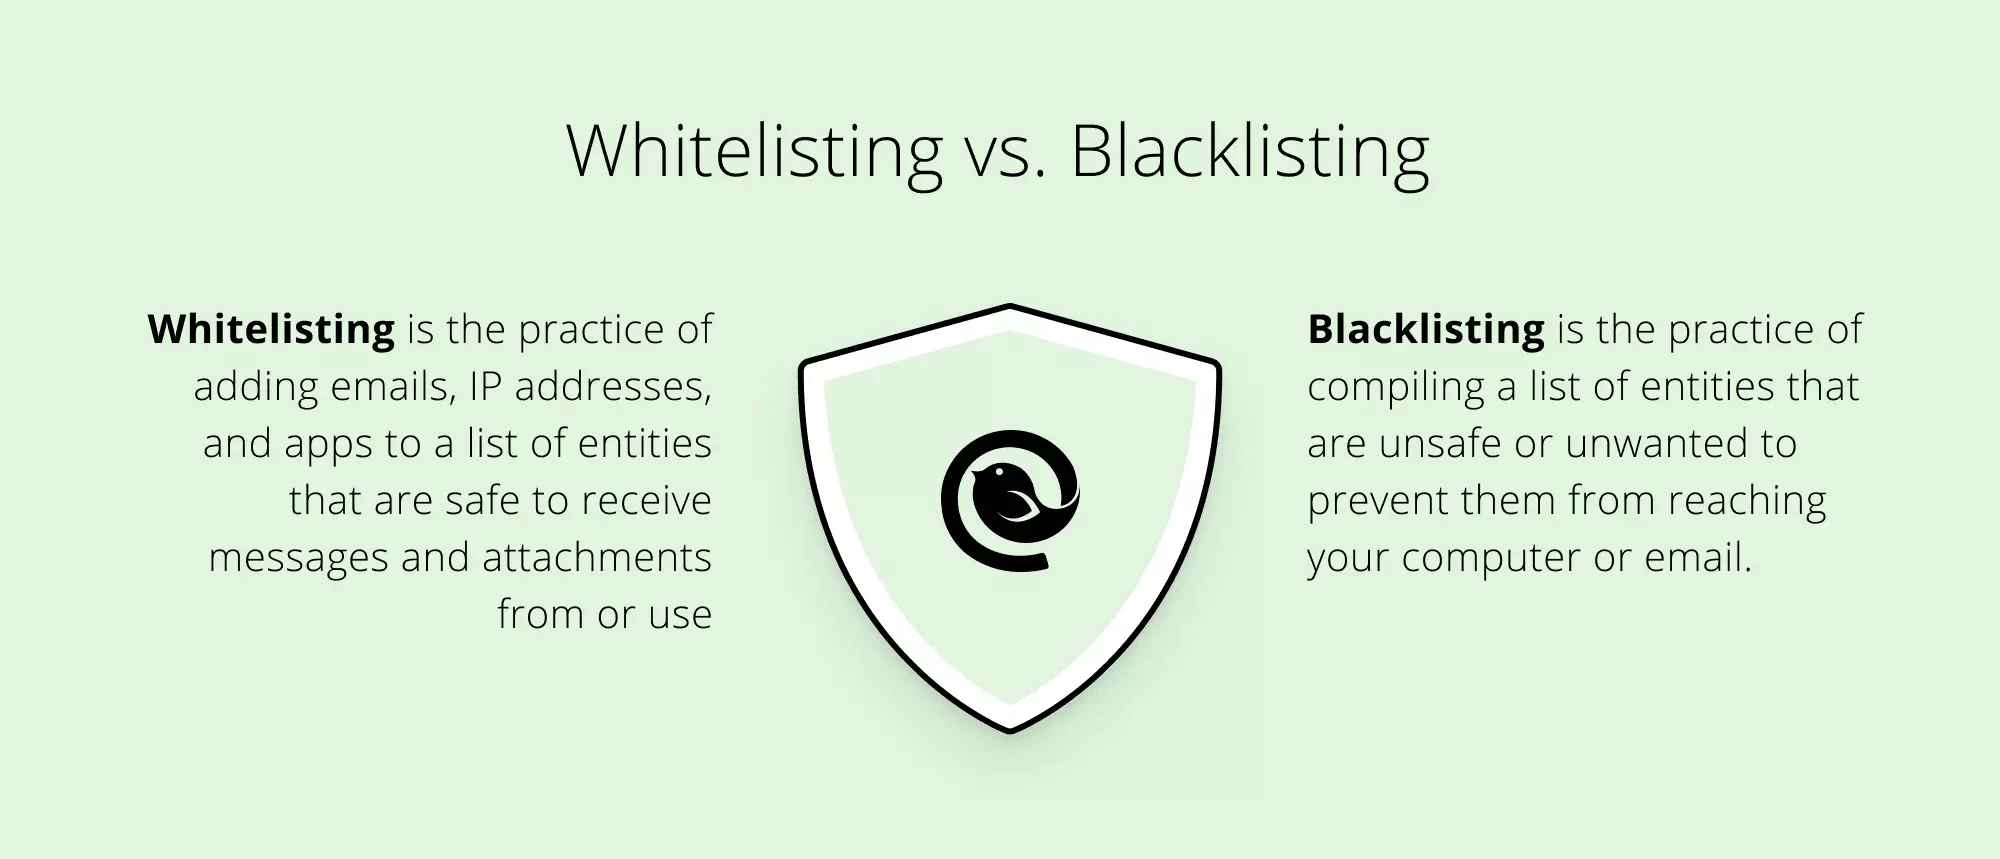 Whitelisting vs. Blacklisting